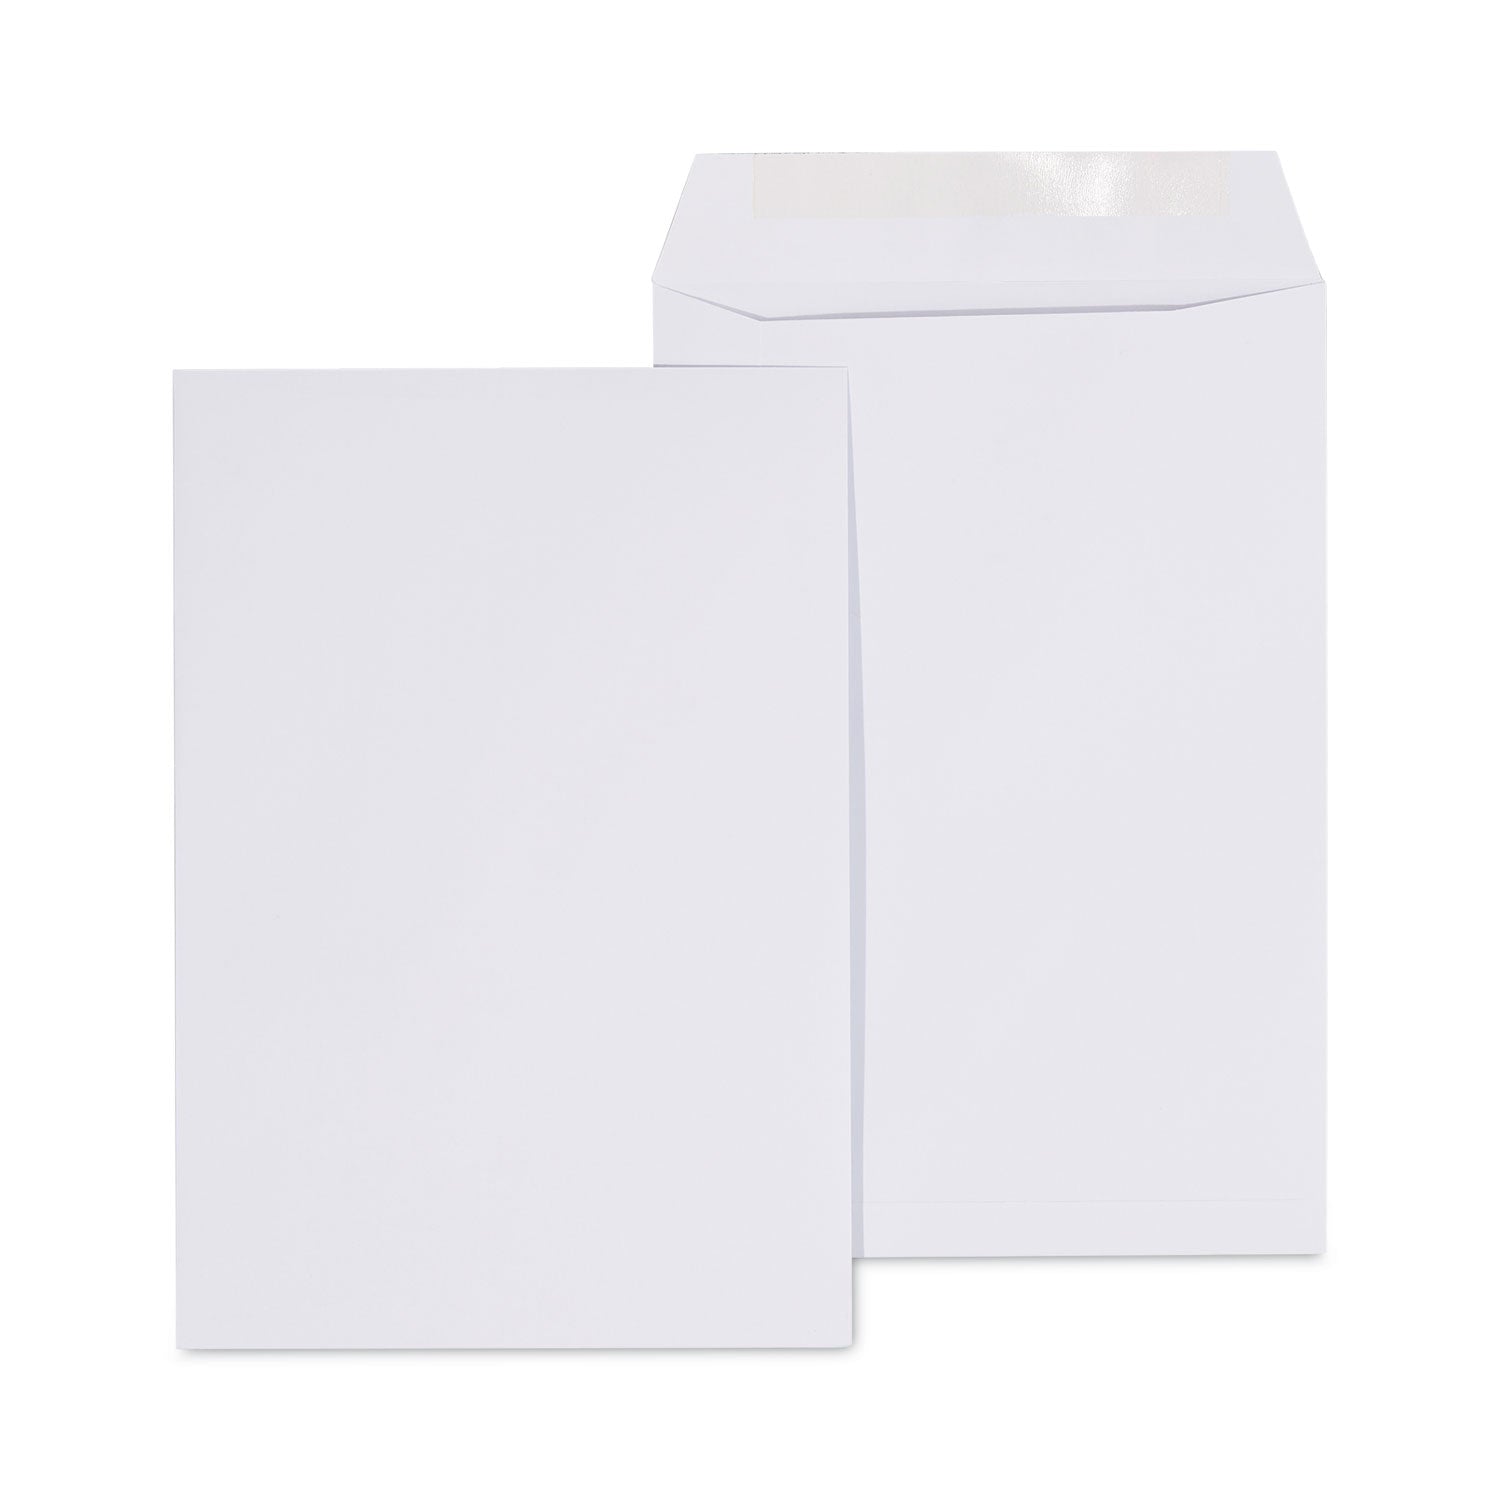 Catalog Envelope, 24 lb Bond Weight Paper, #1 3/4, Square Flap, Gummed Closure, 6.5 x 9.5, White, 500/Box - 